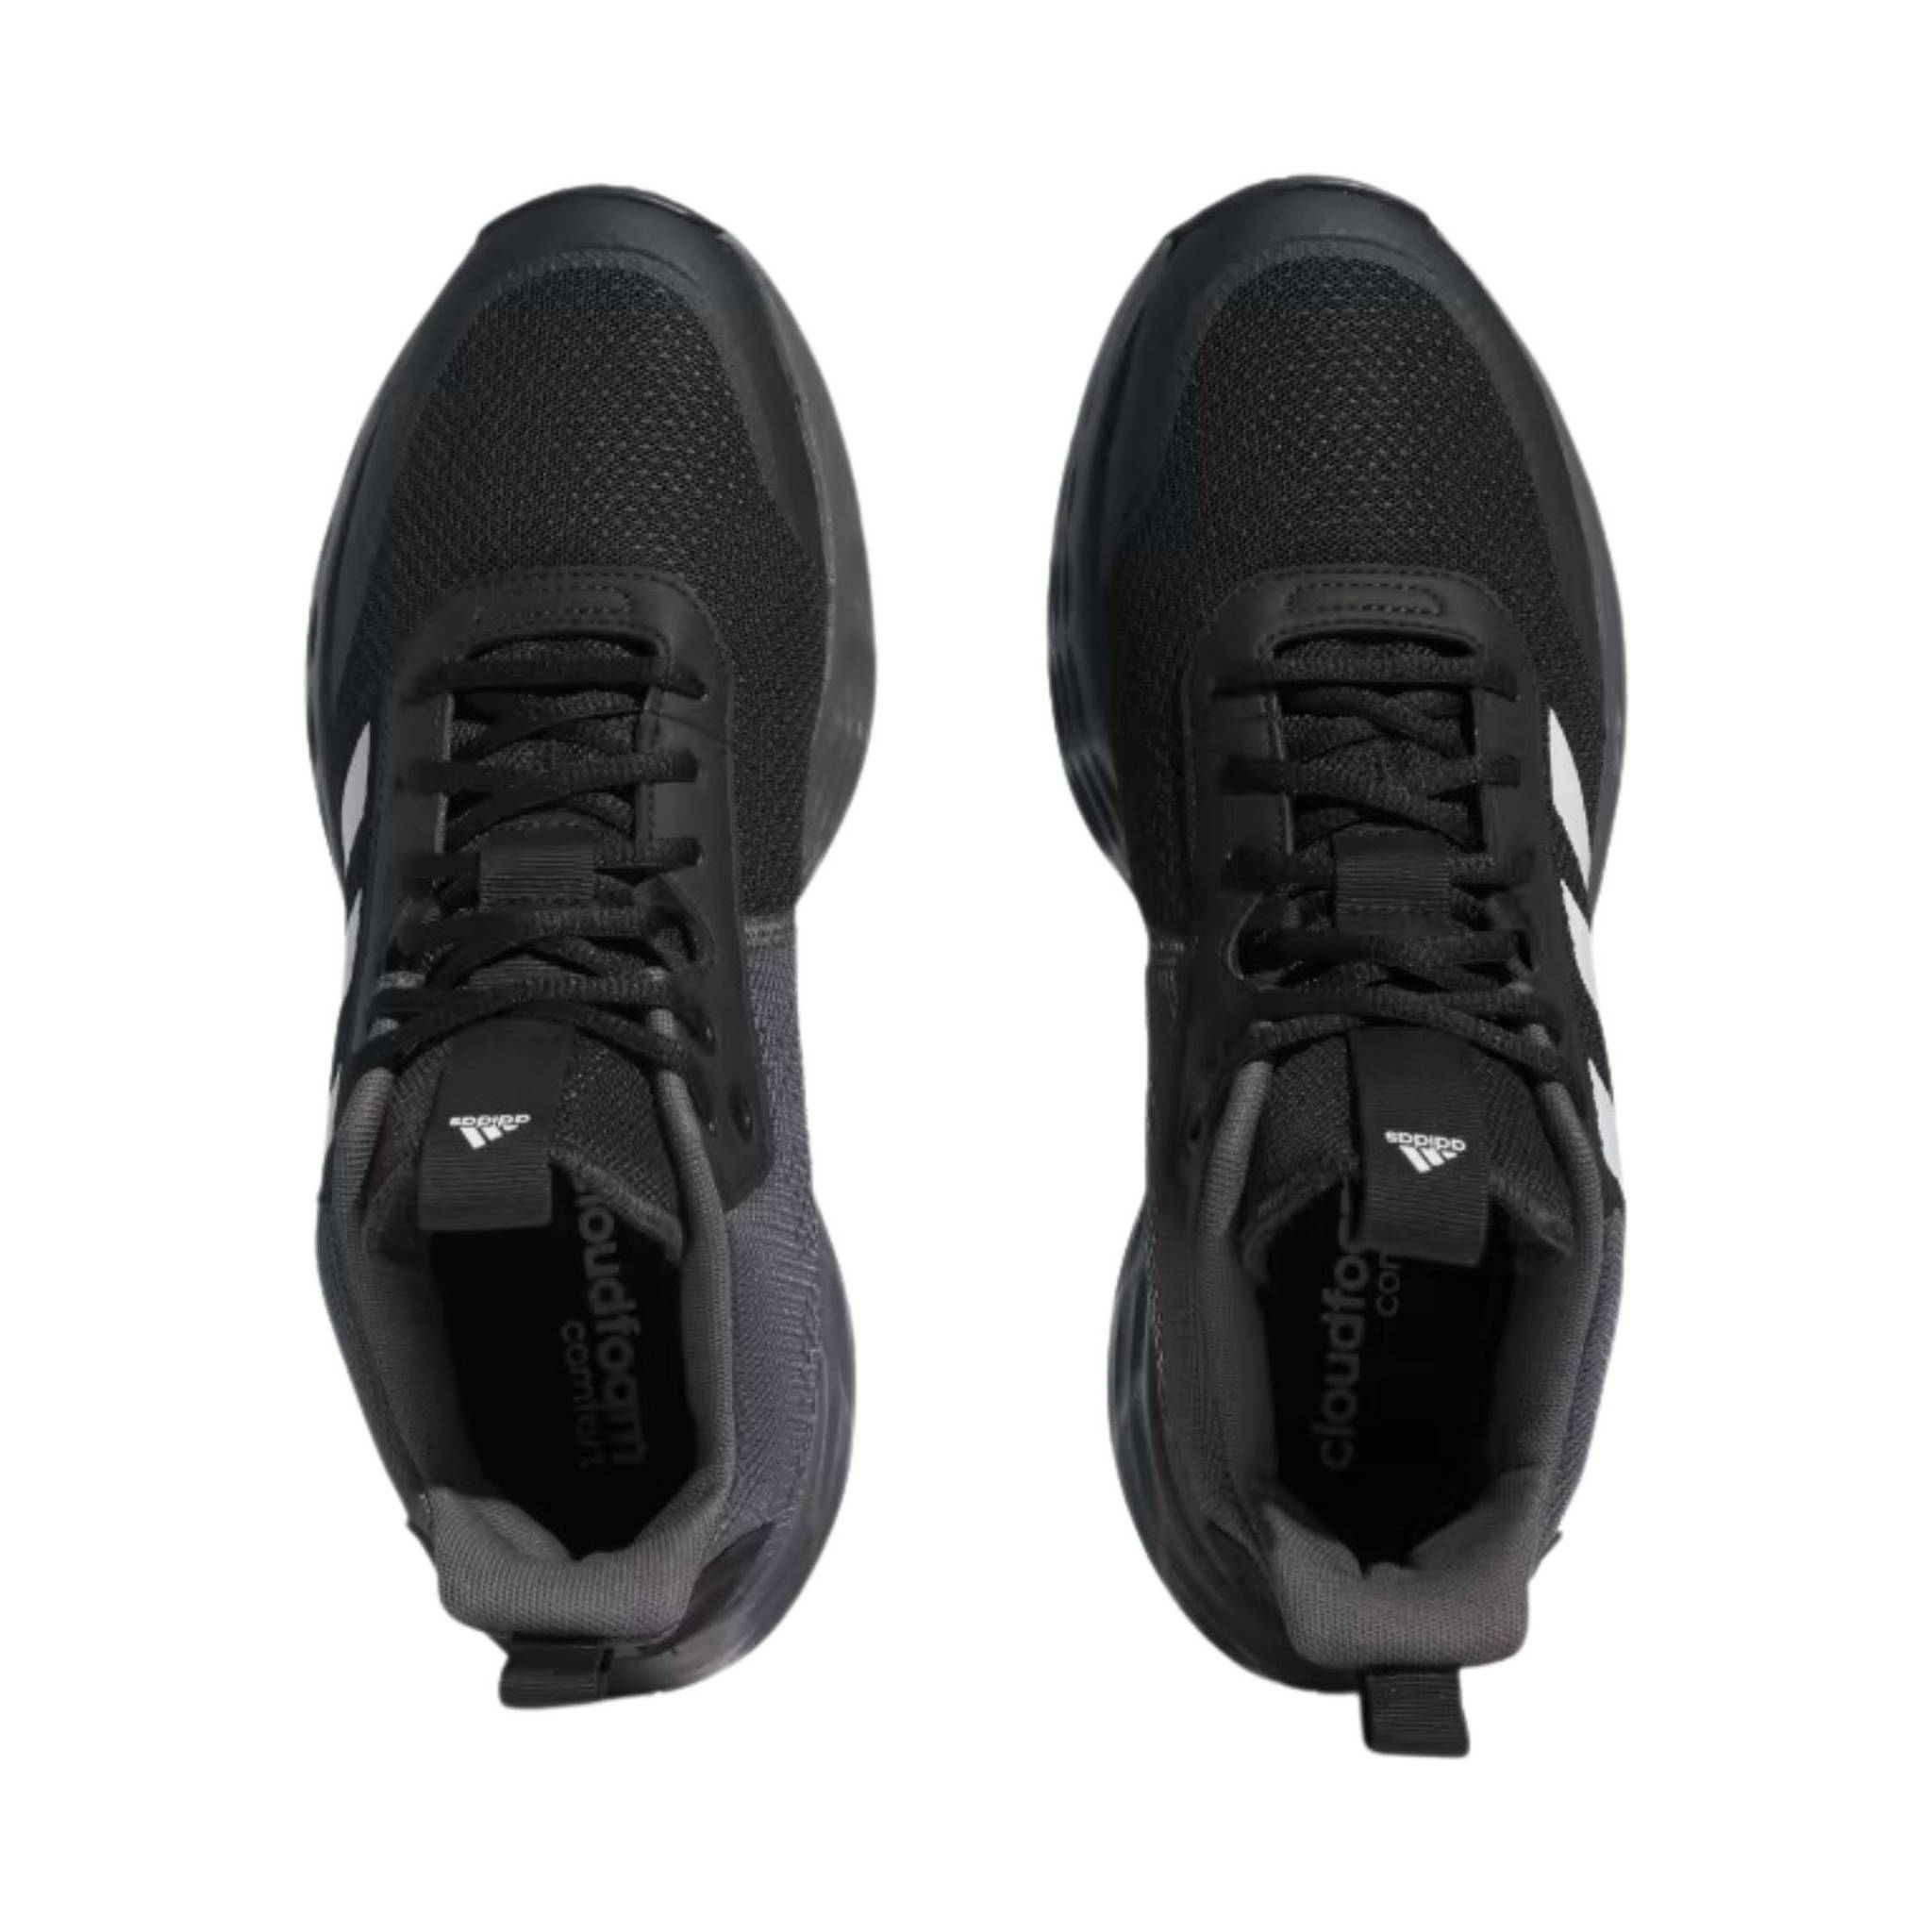 Altra Lone Peak 7 Men's - Black/Grey | When The Shoe Fits